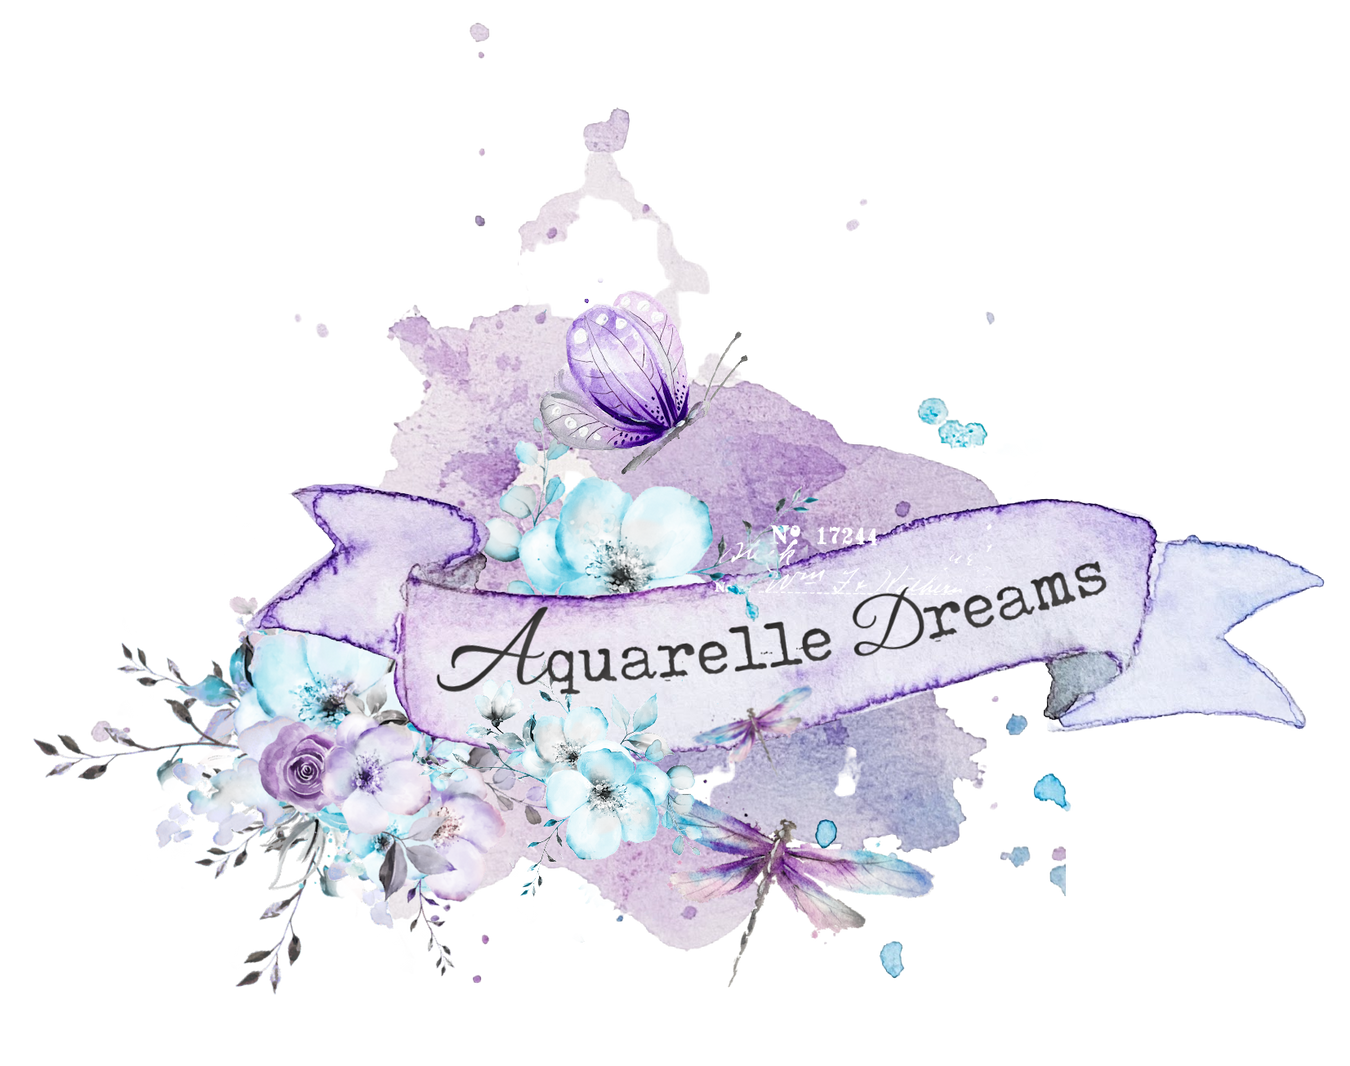 Prima > Aquarelle Dreams